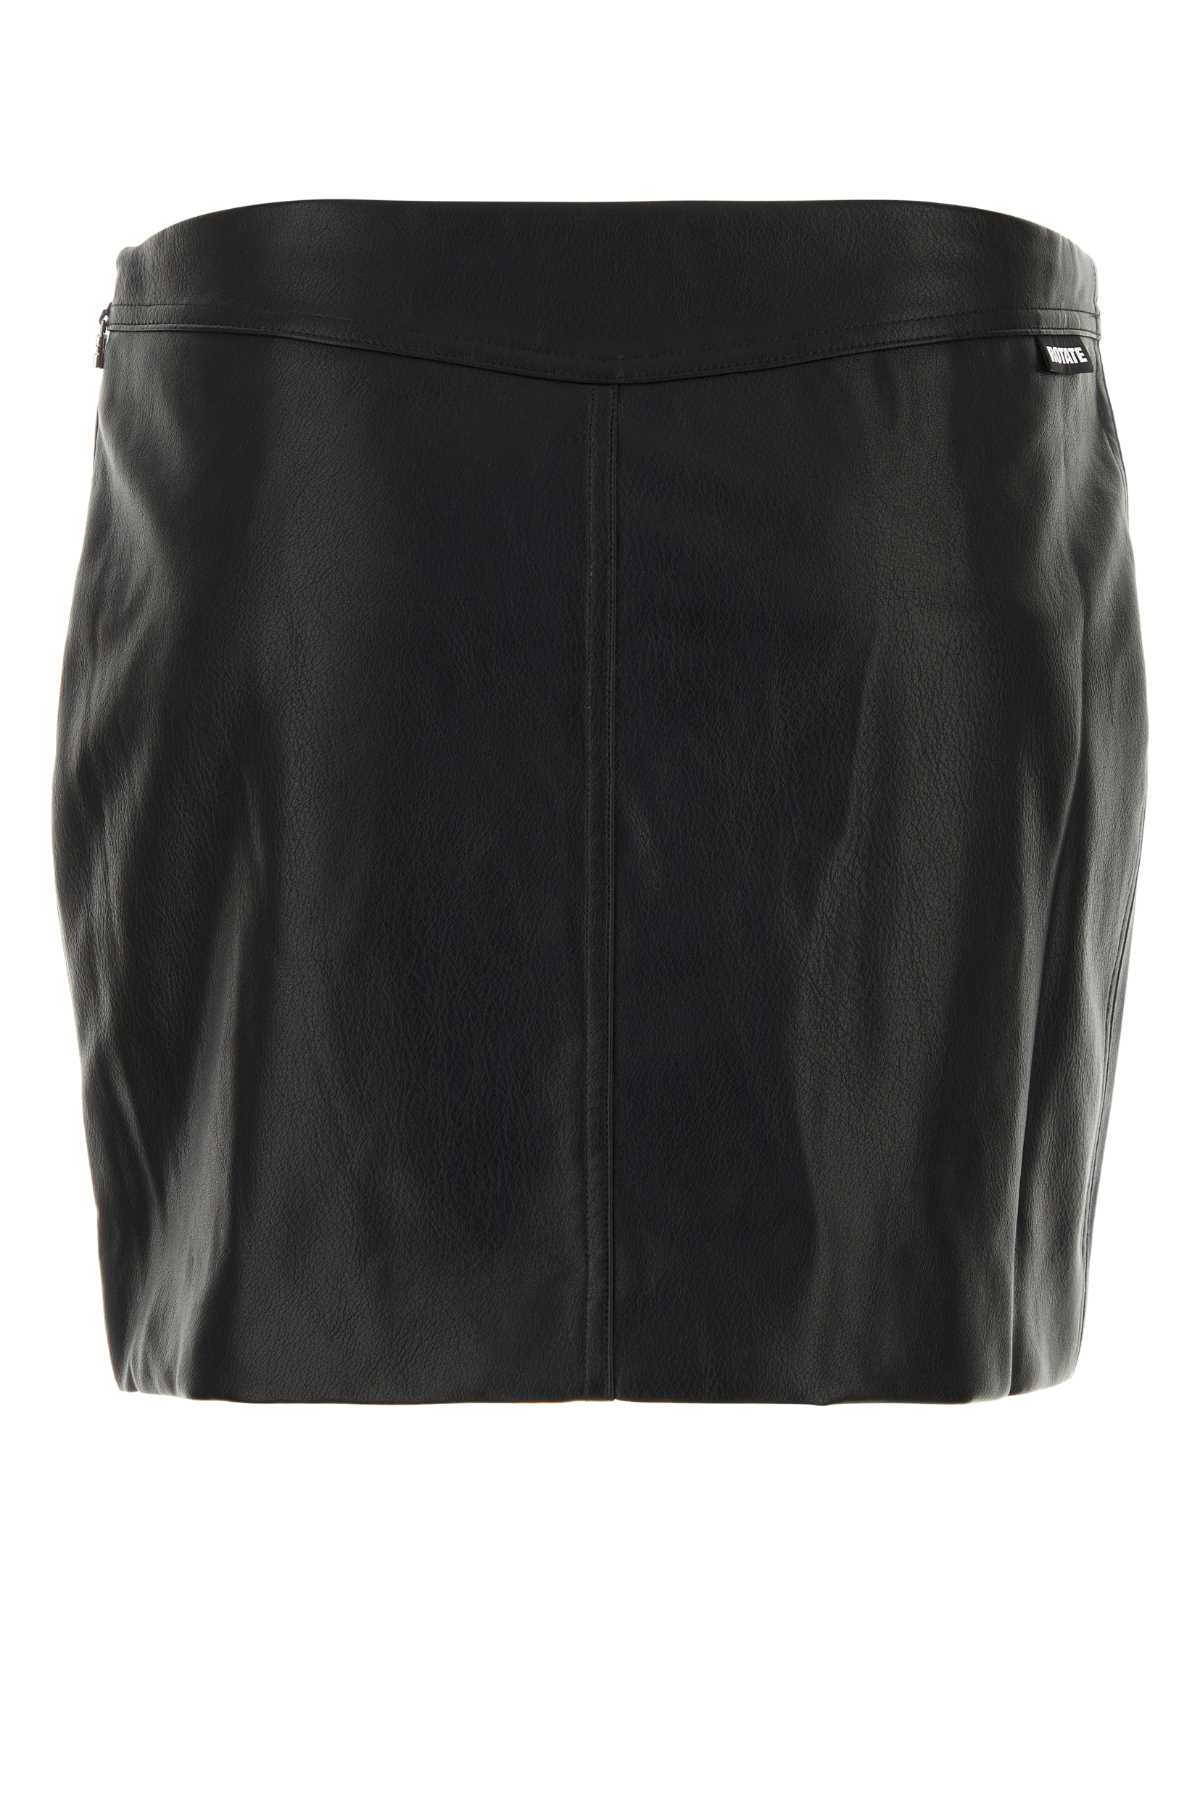 Shop Rotate Birger Christensen Black Synthetic Leather Mini Skirt